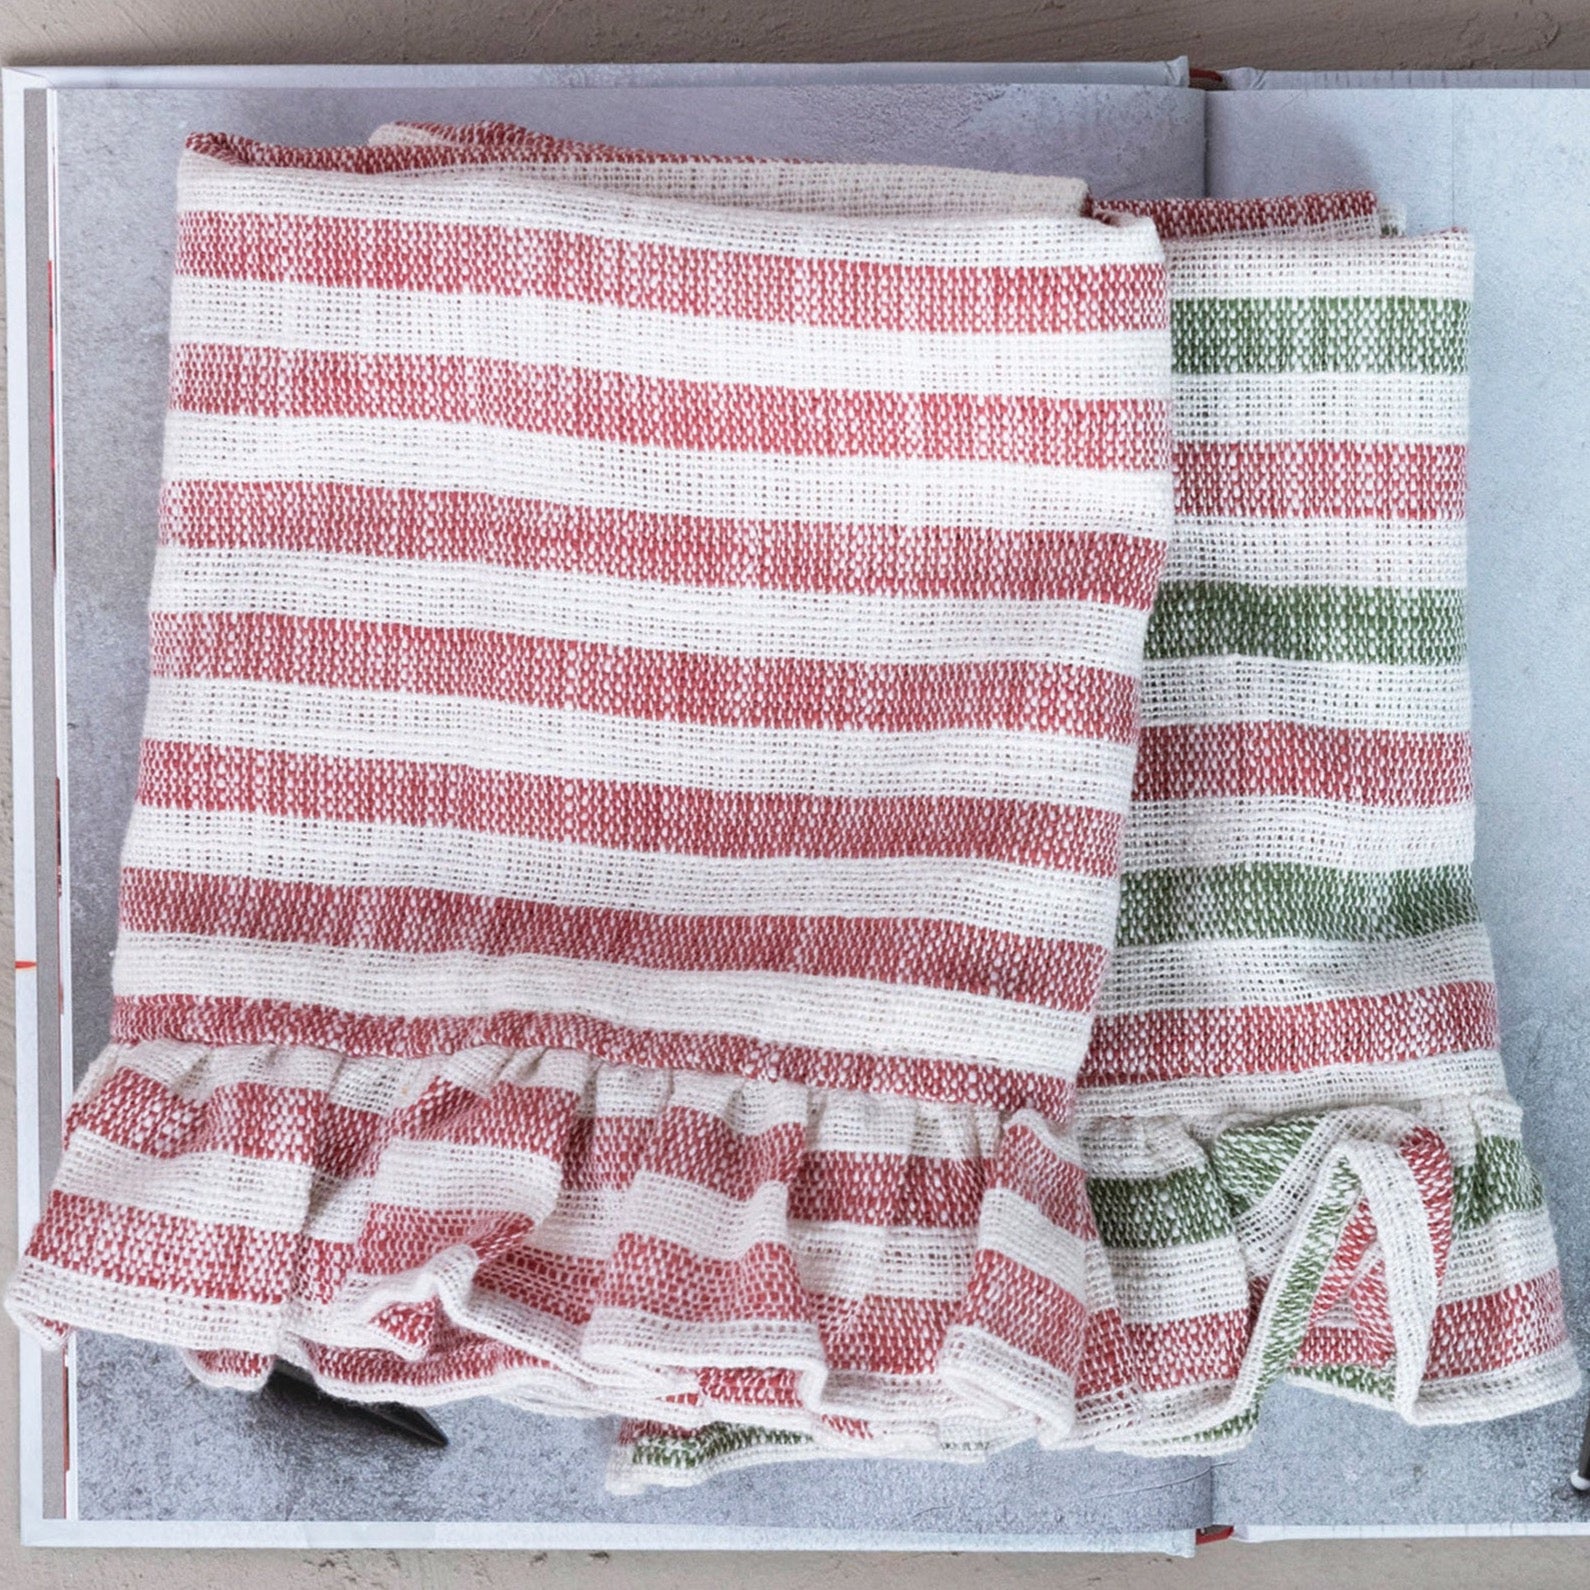 Multi Striped Cotton Tea Towel with Ruffle (Set of 3 Colors)